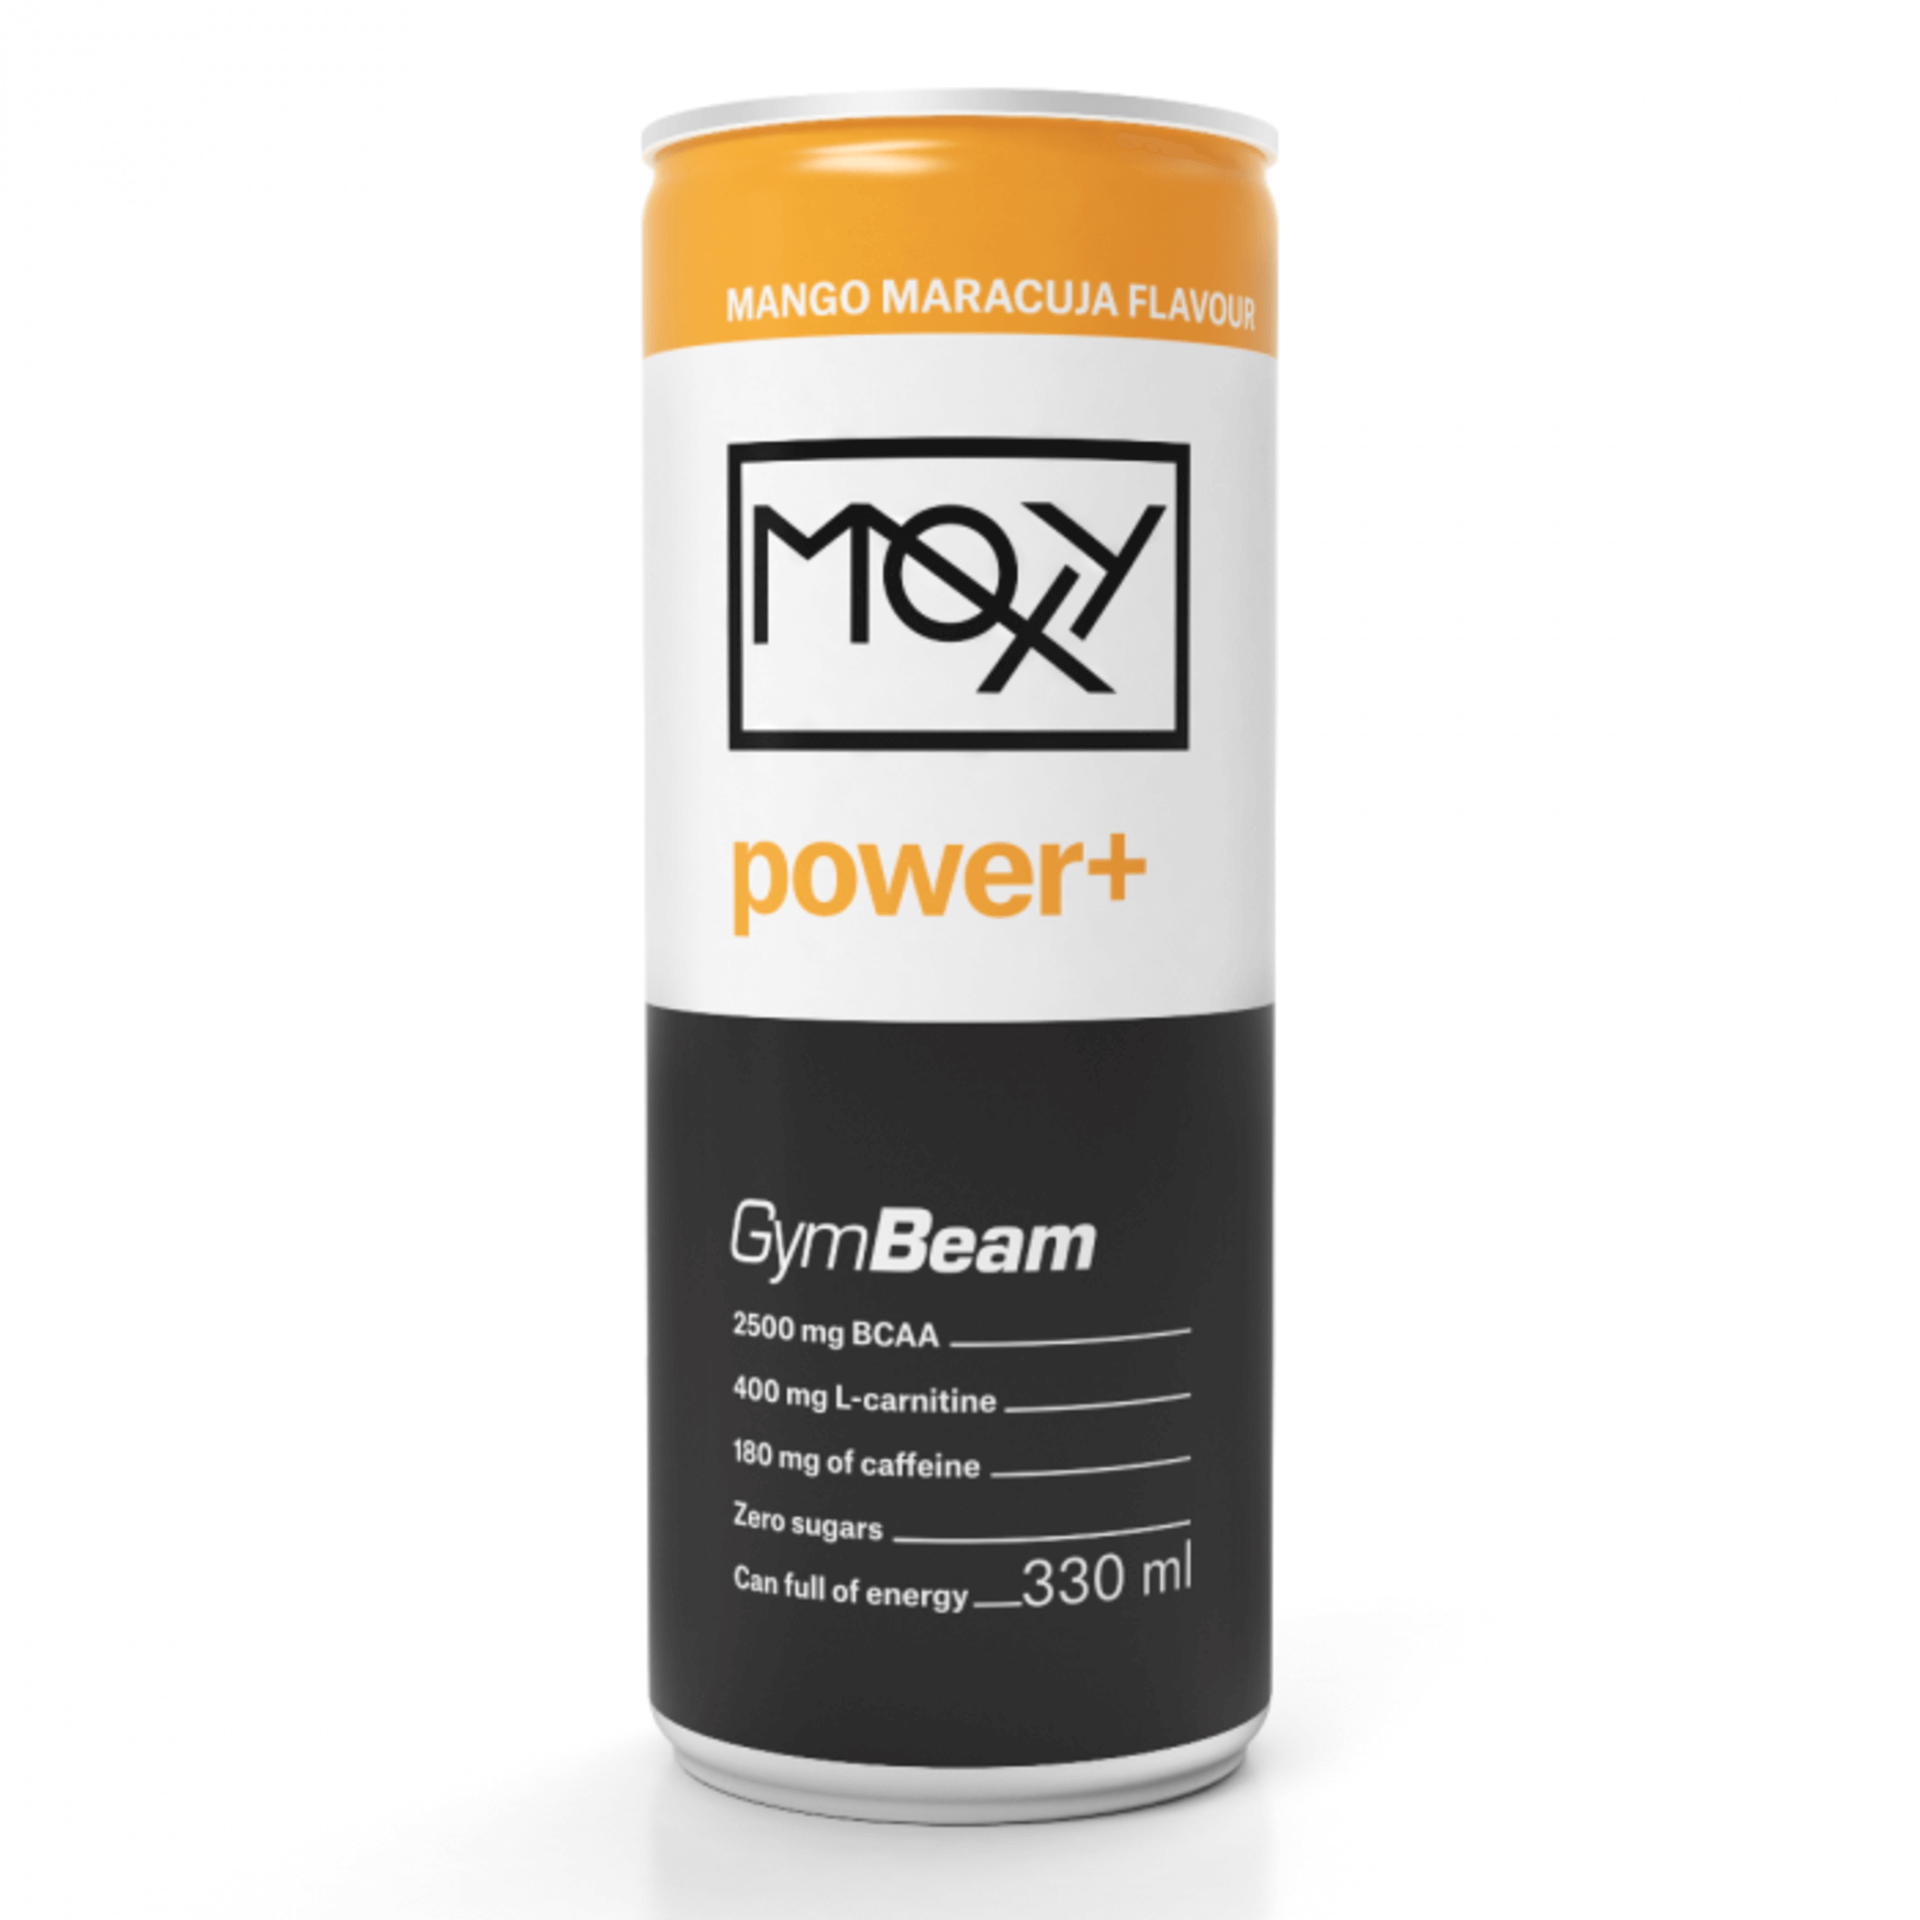 E-shop GymBeam Moxy BCAA Energy drink 330 ml